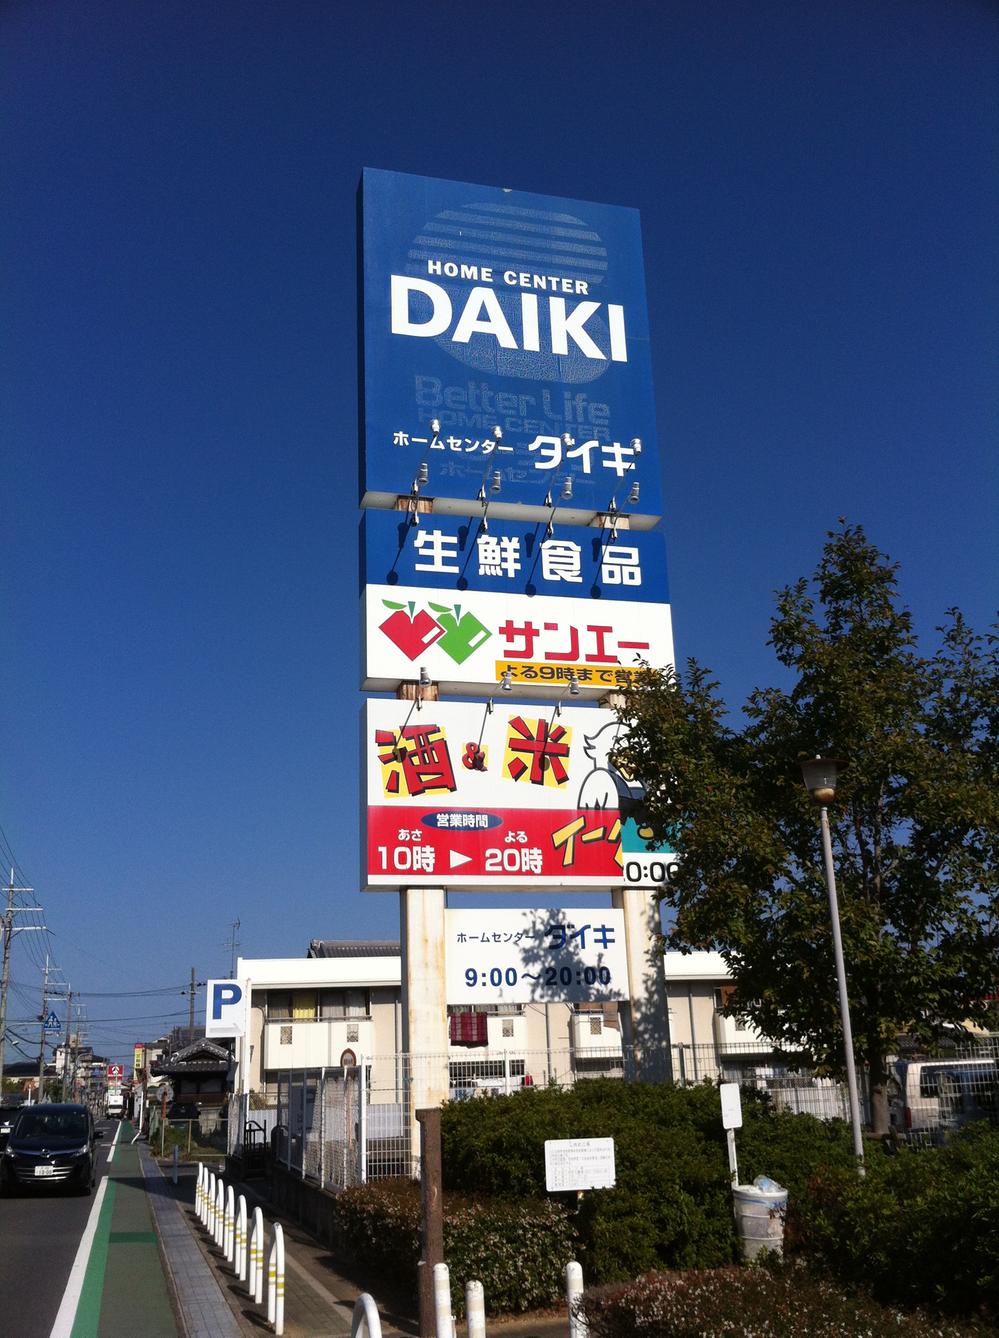 Home center. 150m to Daiki